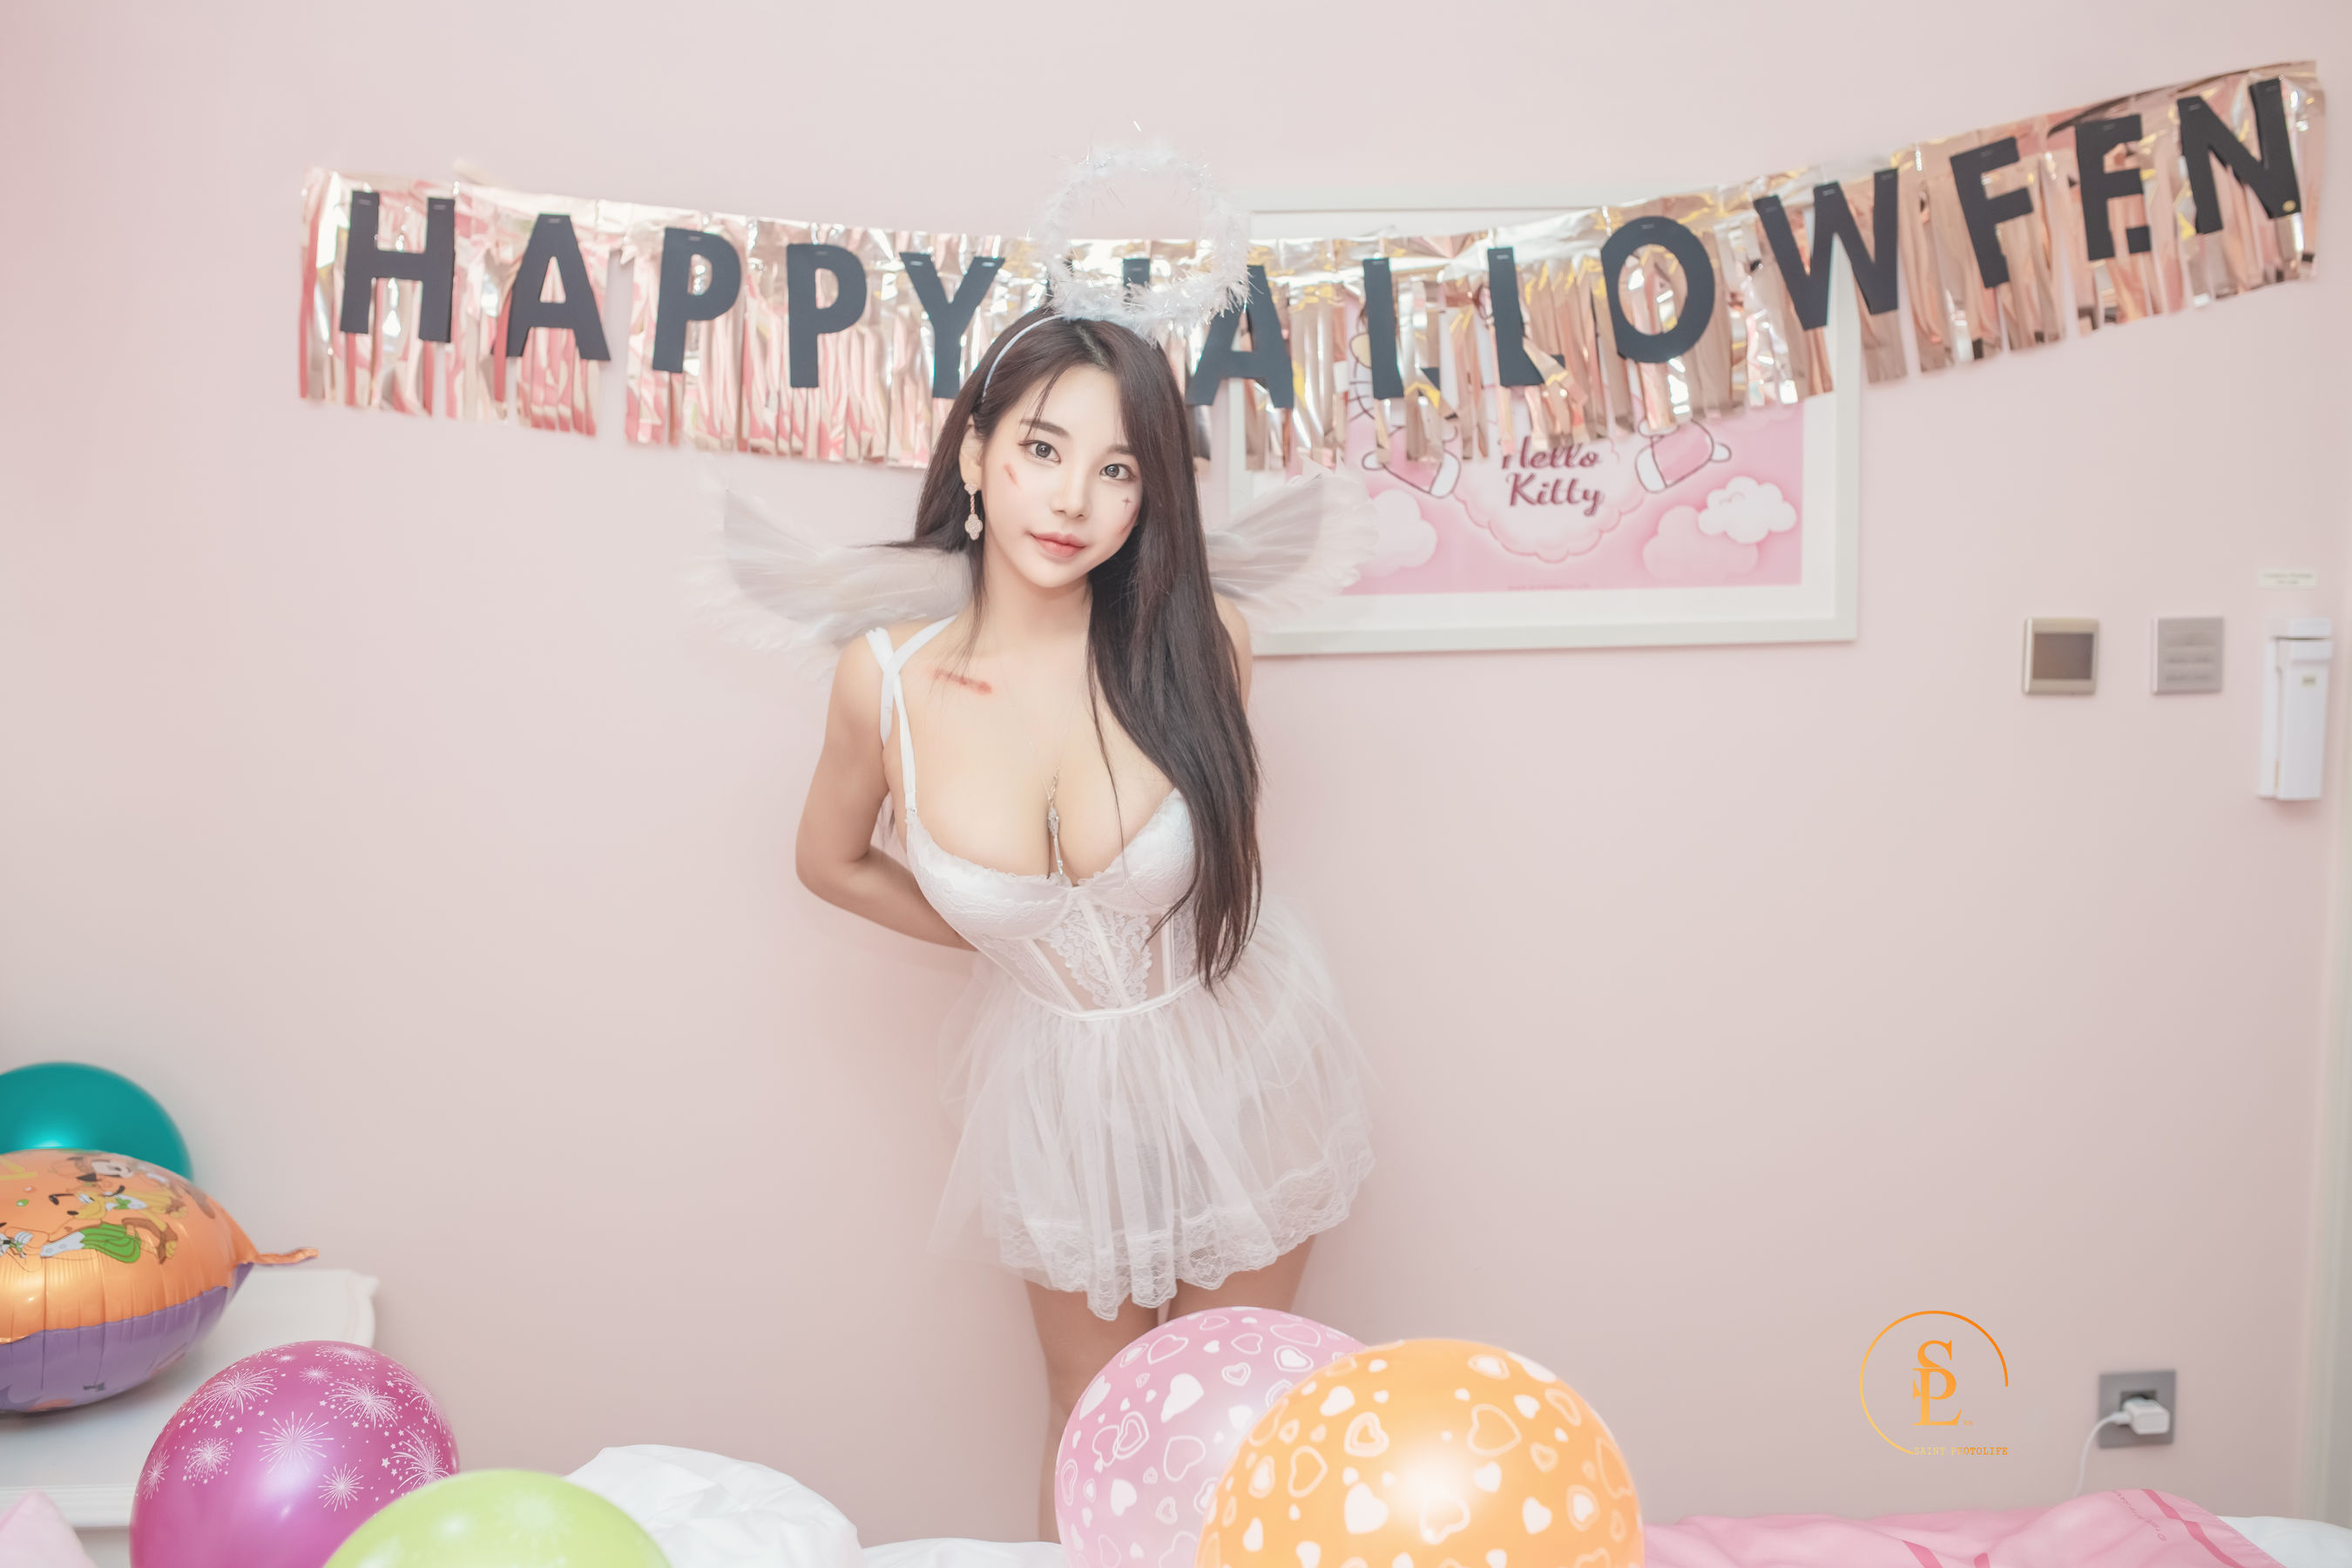 [saintphotolife] Zzyuri - Vol.16 Pink Halloween/(58P)